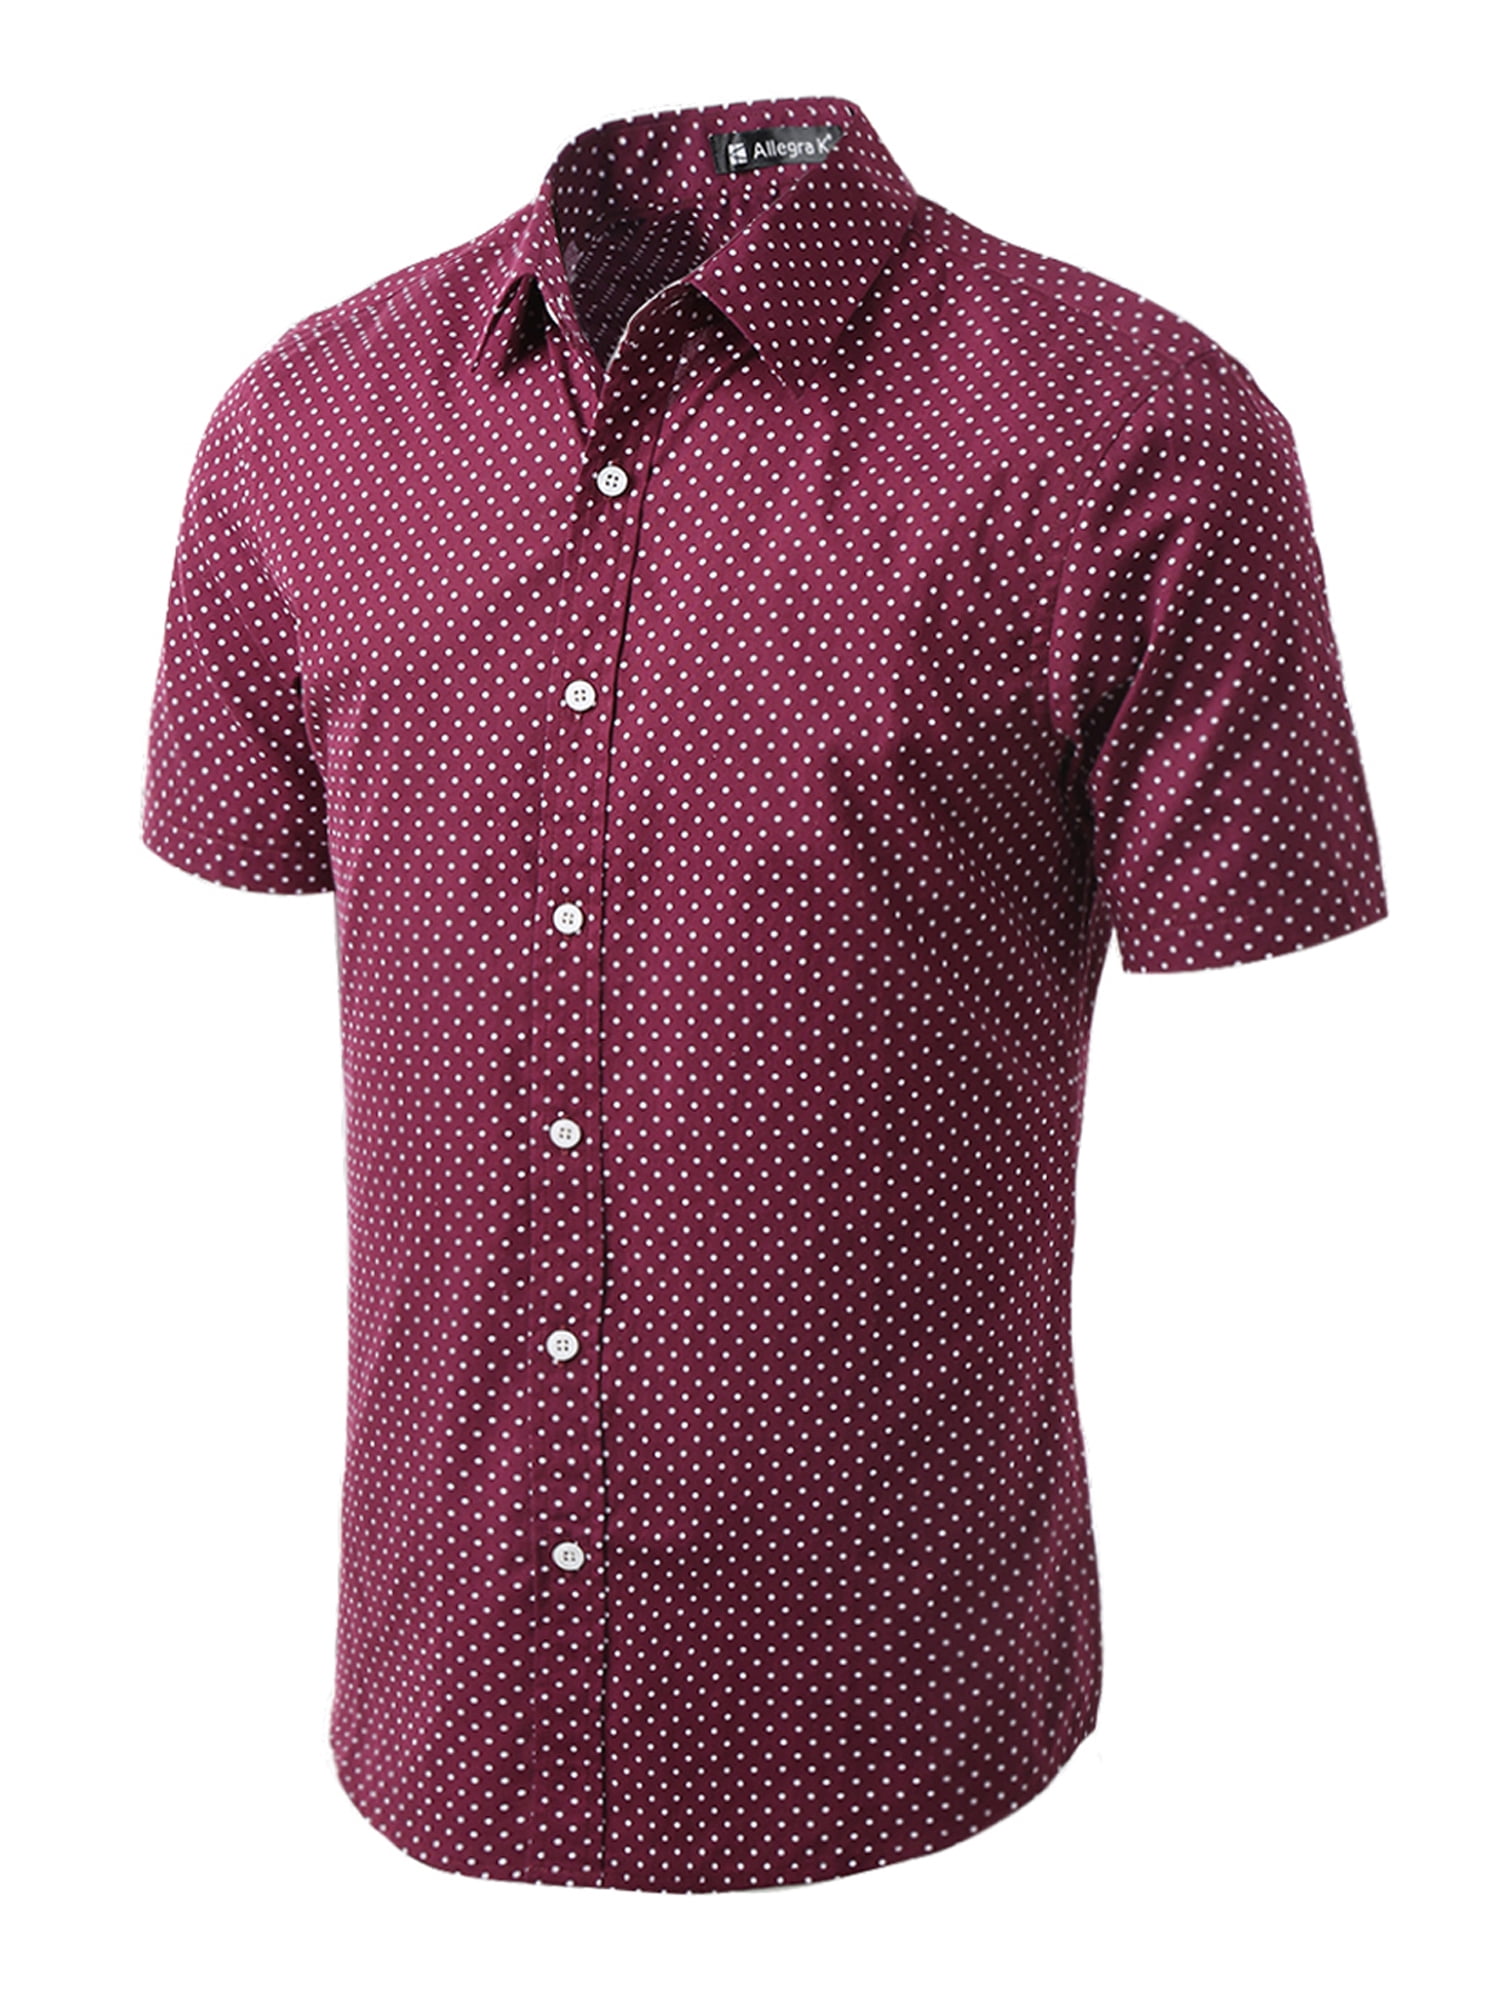 Lars Amadeus Men's Short Sleeves Polka Dots Button Down Shirt - Walmart.com